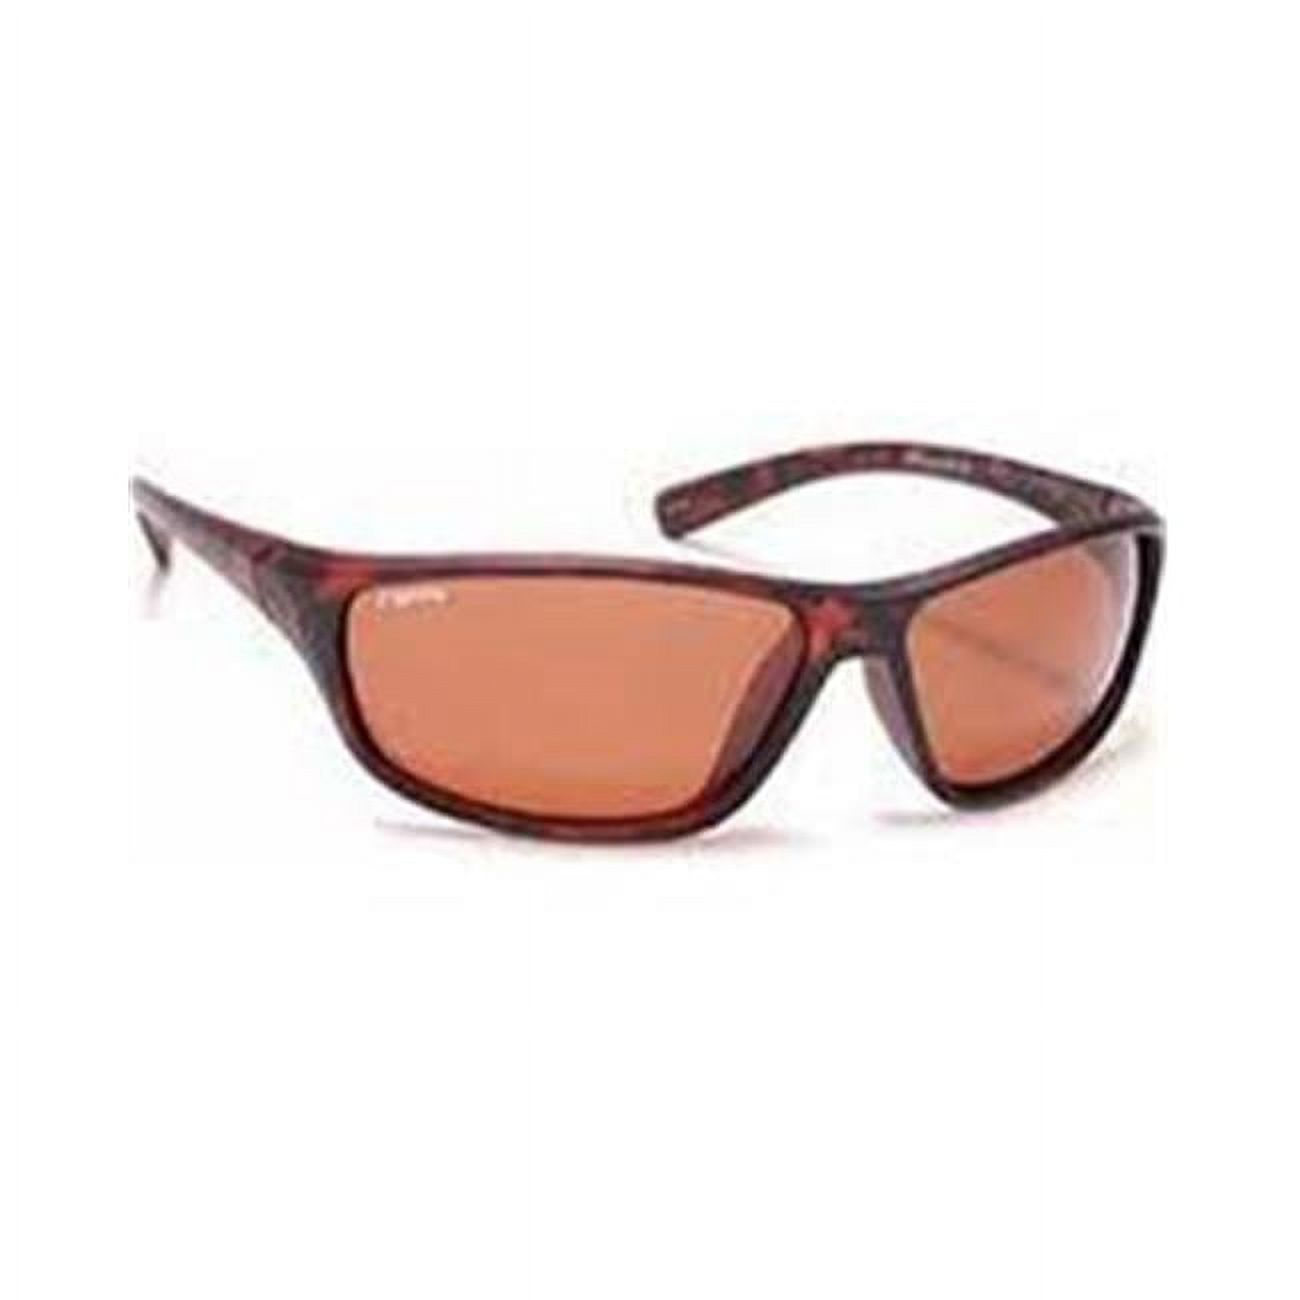 Coyote Eyewear 680562076042 P-38 Polarized Sport Sunglasses, Matte Tortoise & Brown - image 1 of 2